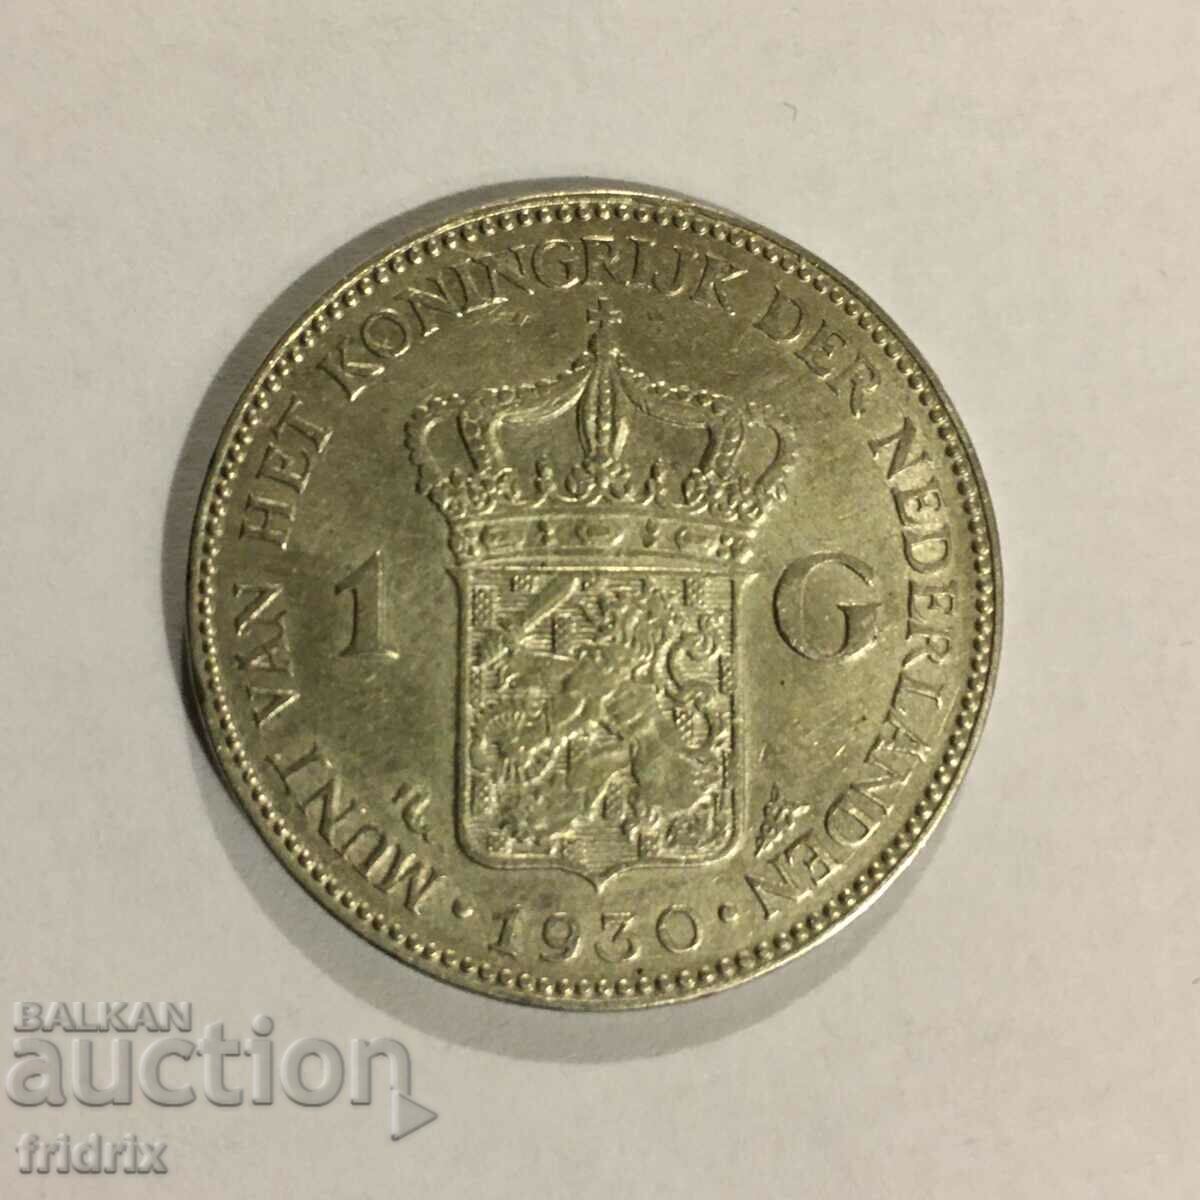 Țările de Jos 1 gulden 1930 / Olanda 1 gulden 1930